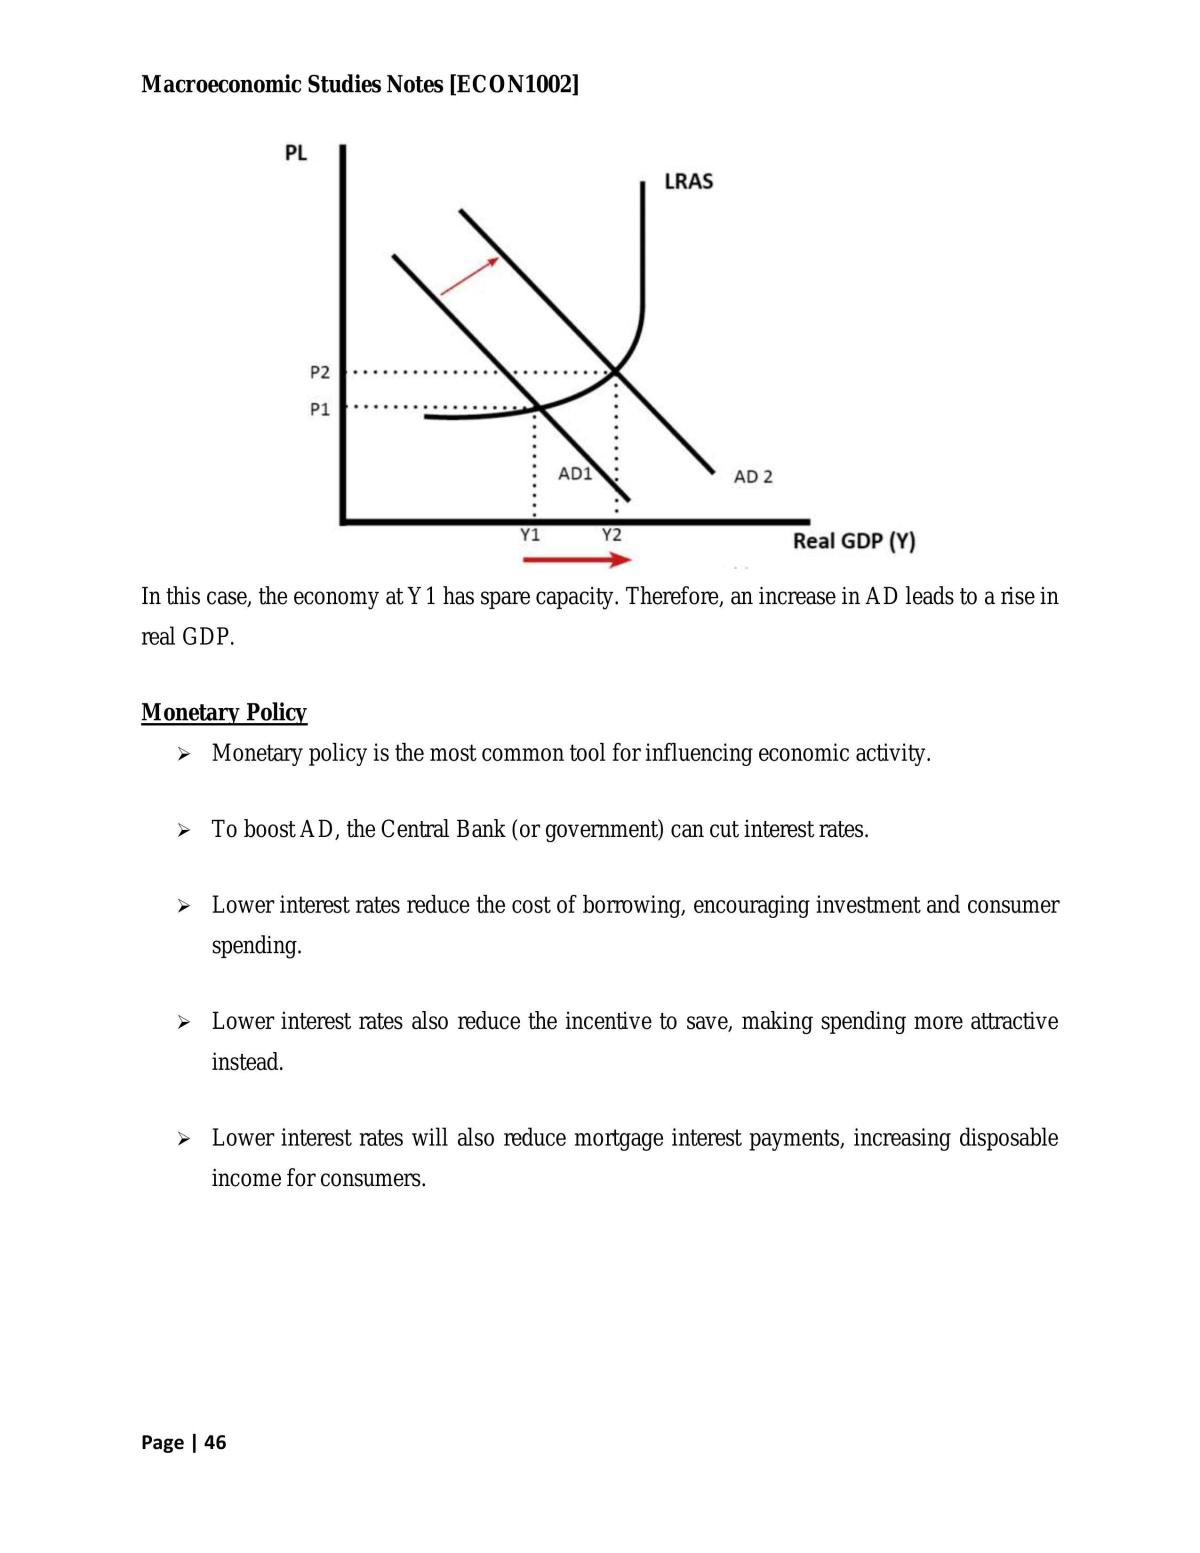 Macroeconomic Studies Notes - Page 46